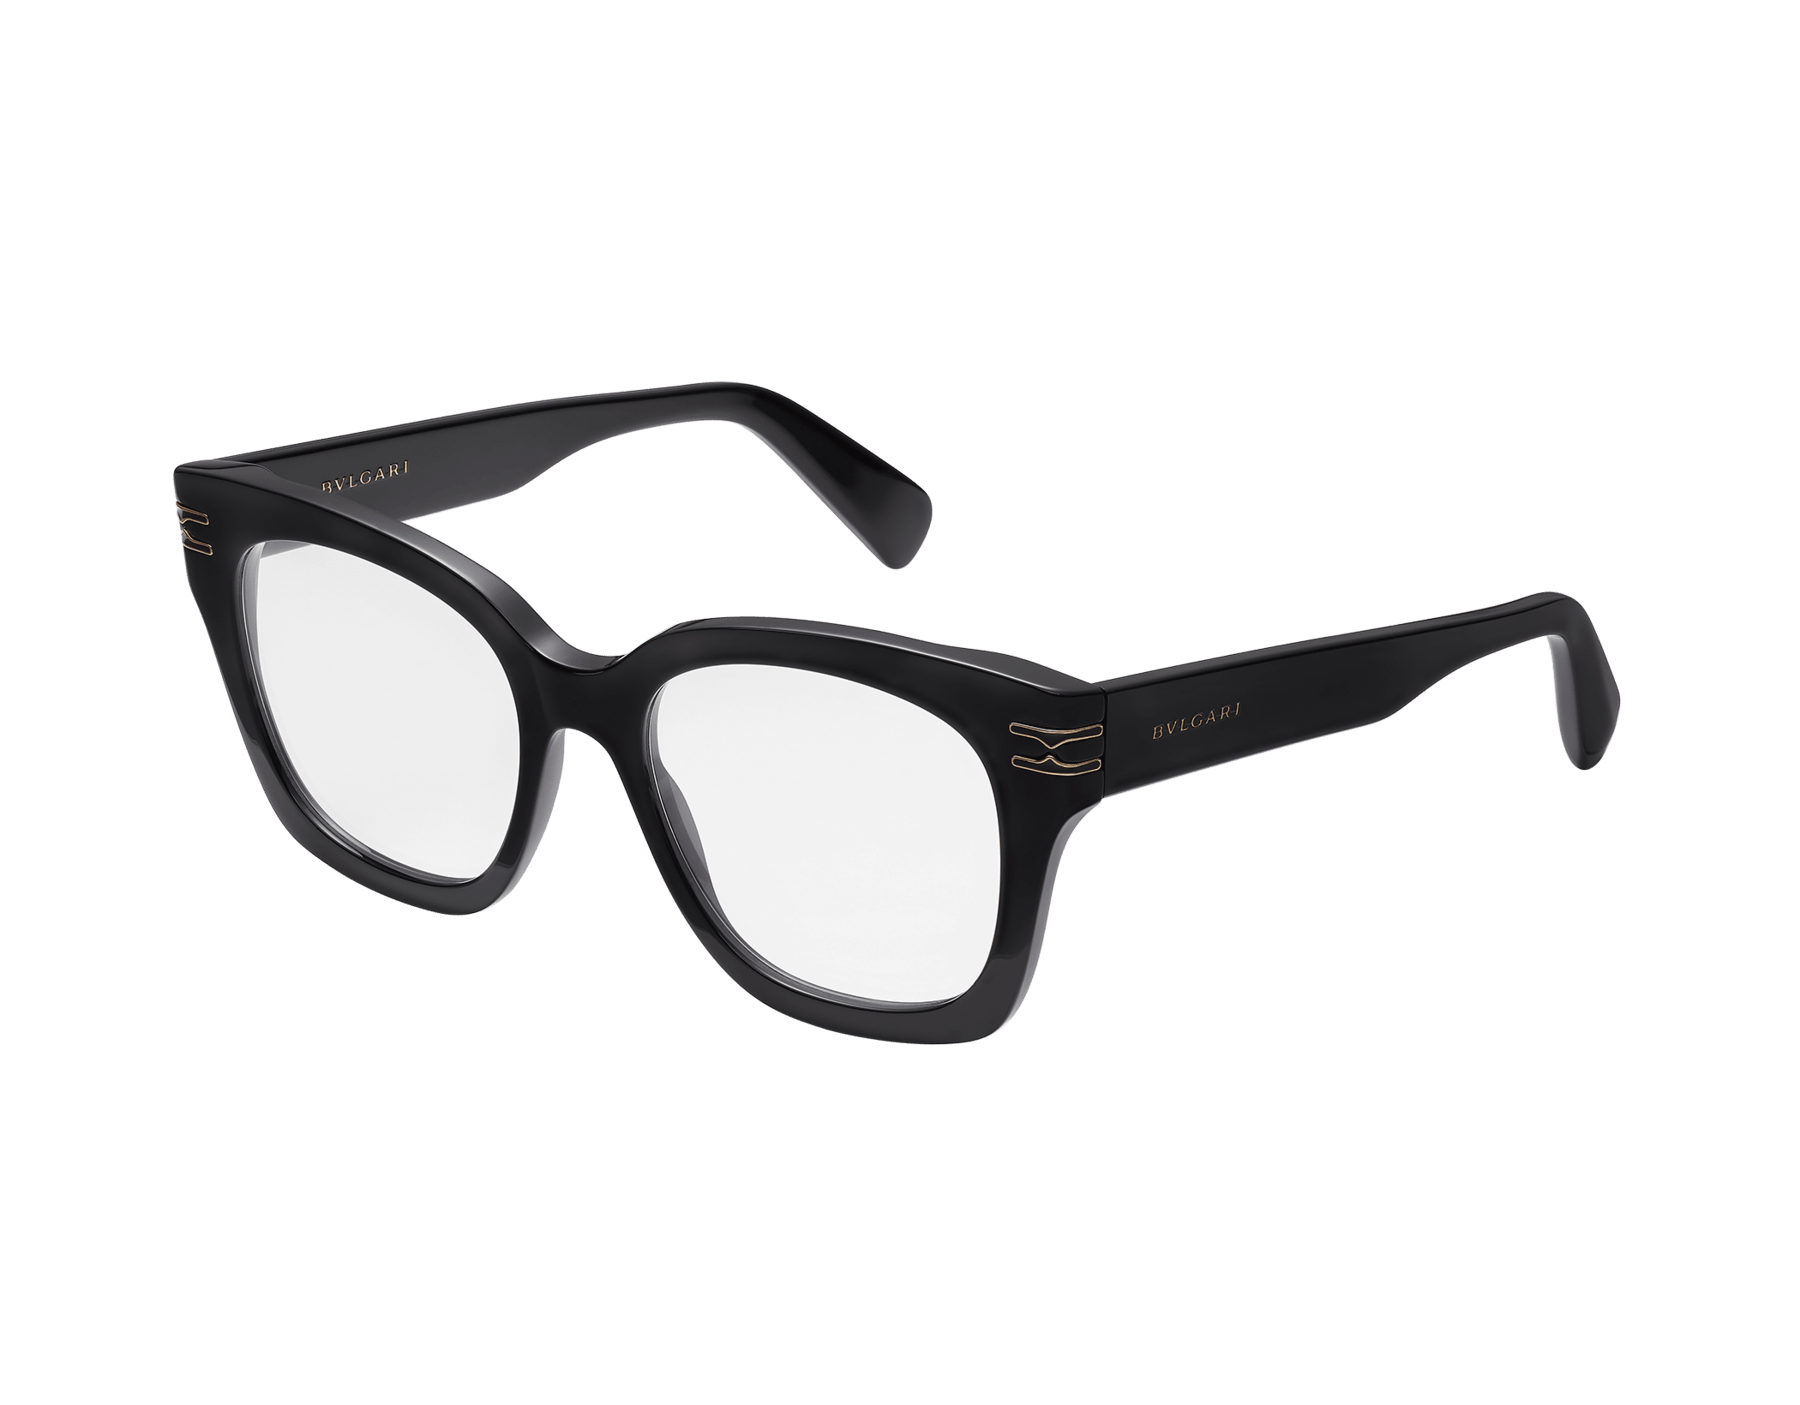 B.zero1 geometric acetate glasses with iconic decor and blue light filter lenses 904304 image 1